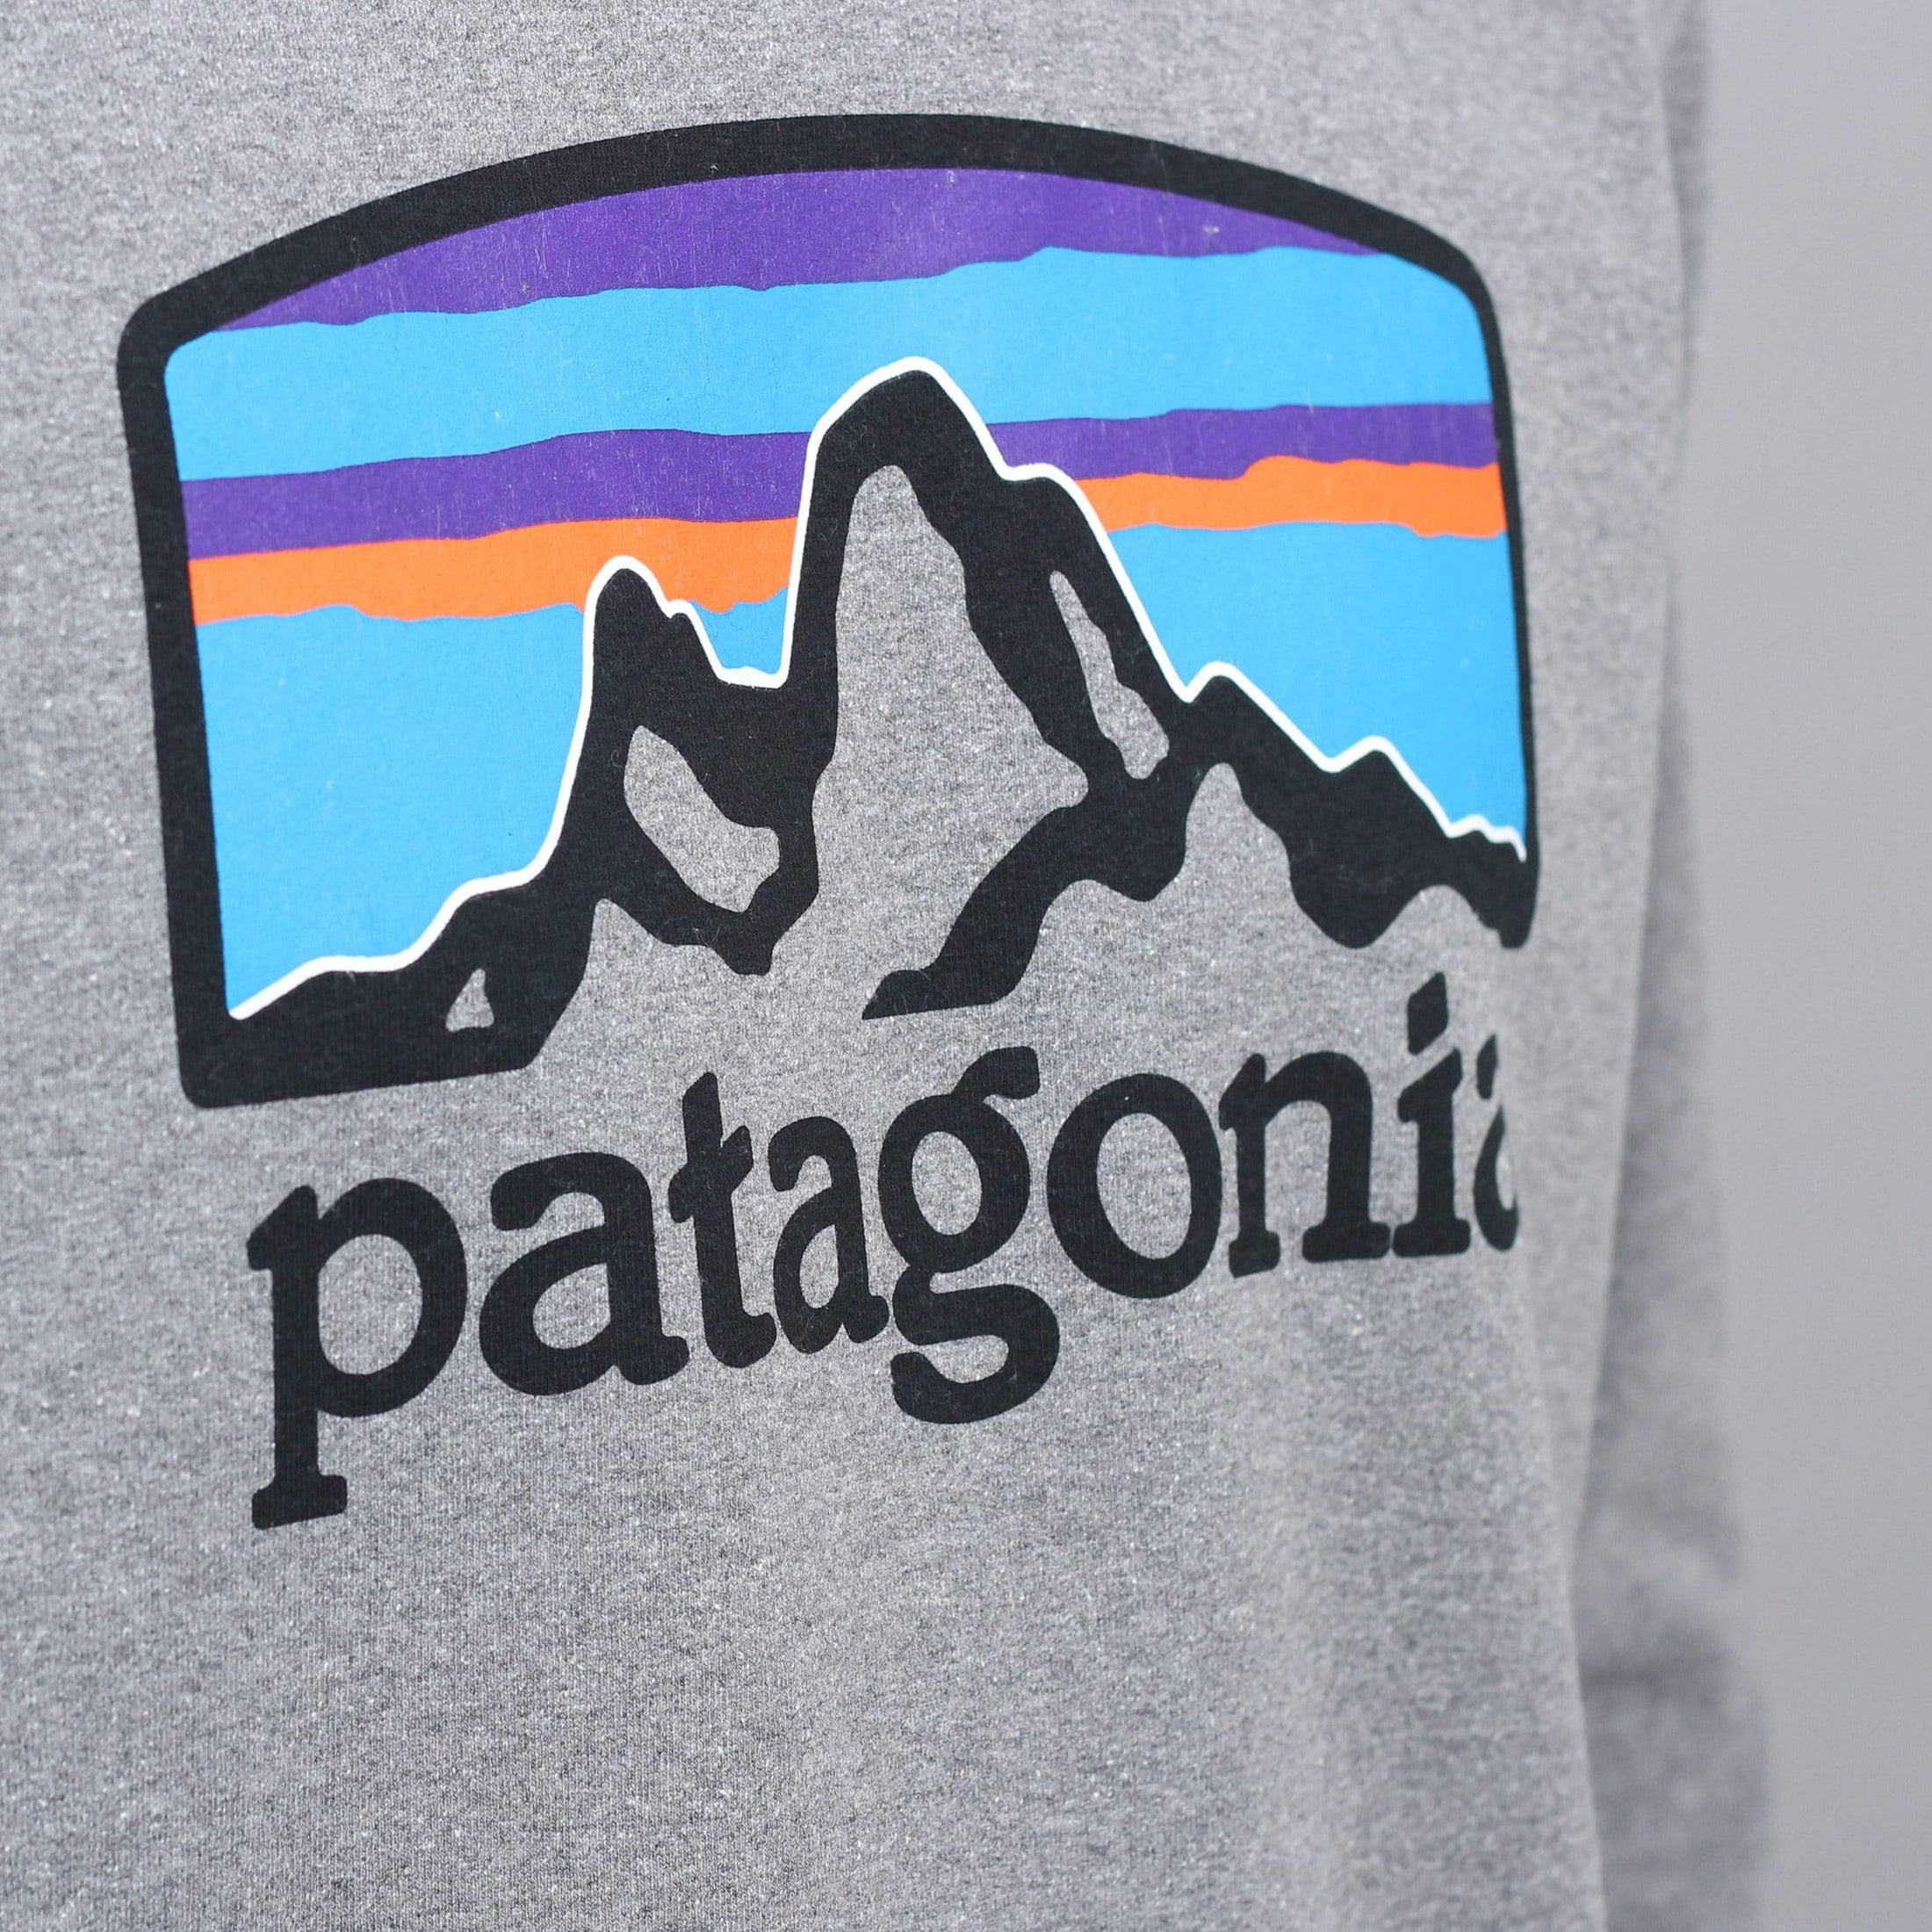 Patagonia Fitz Roy Horizons Uprisal Crew Sweatshirt Gravel Heather